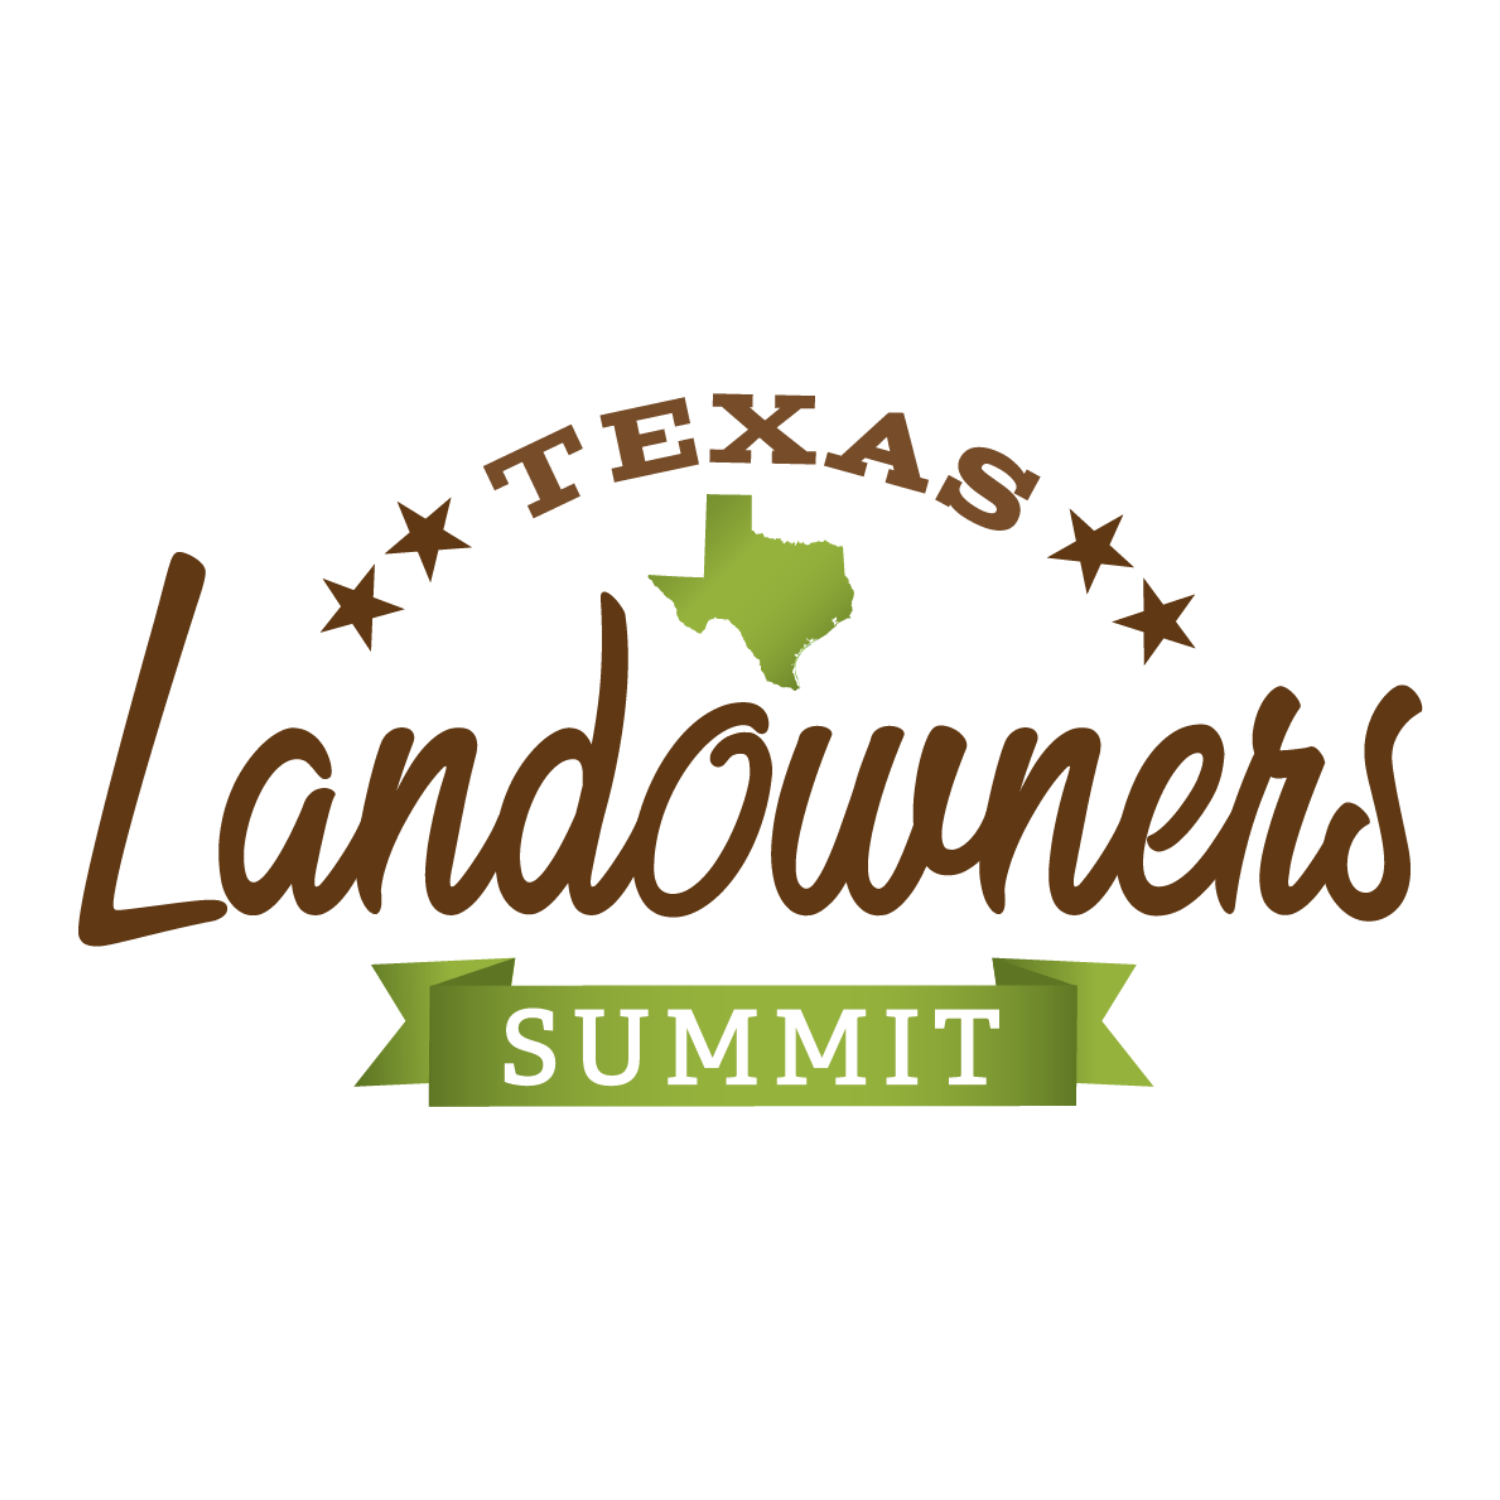 Texas Landowner Summit logo